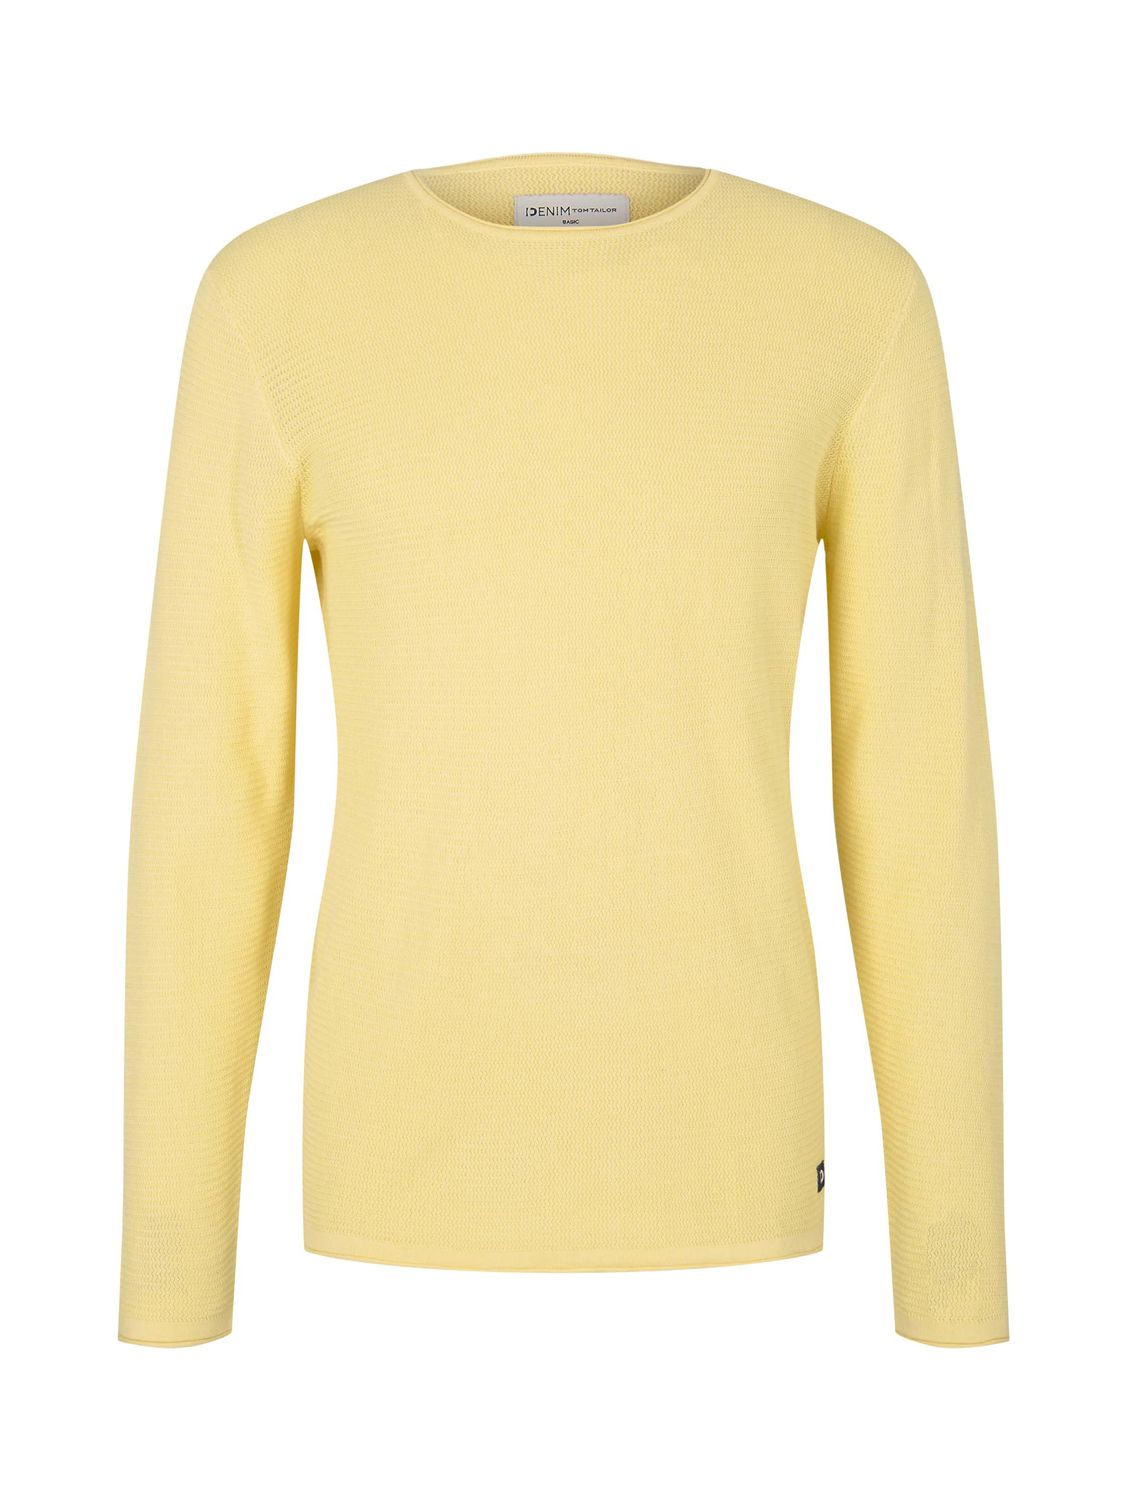 Пуловер TOM TAILOR Denim STRUKTURIERTER, желтый футболка tom tailor размер xl желтый